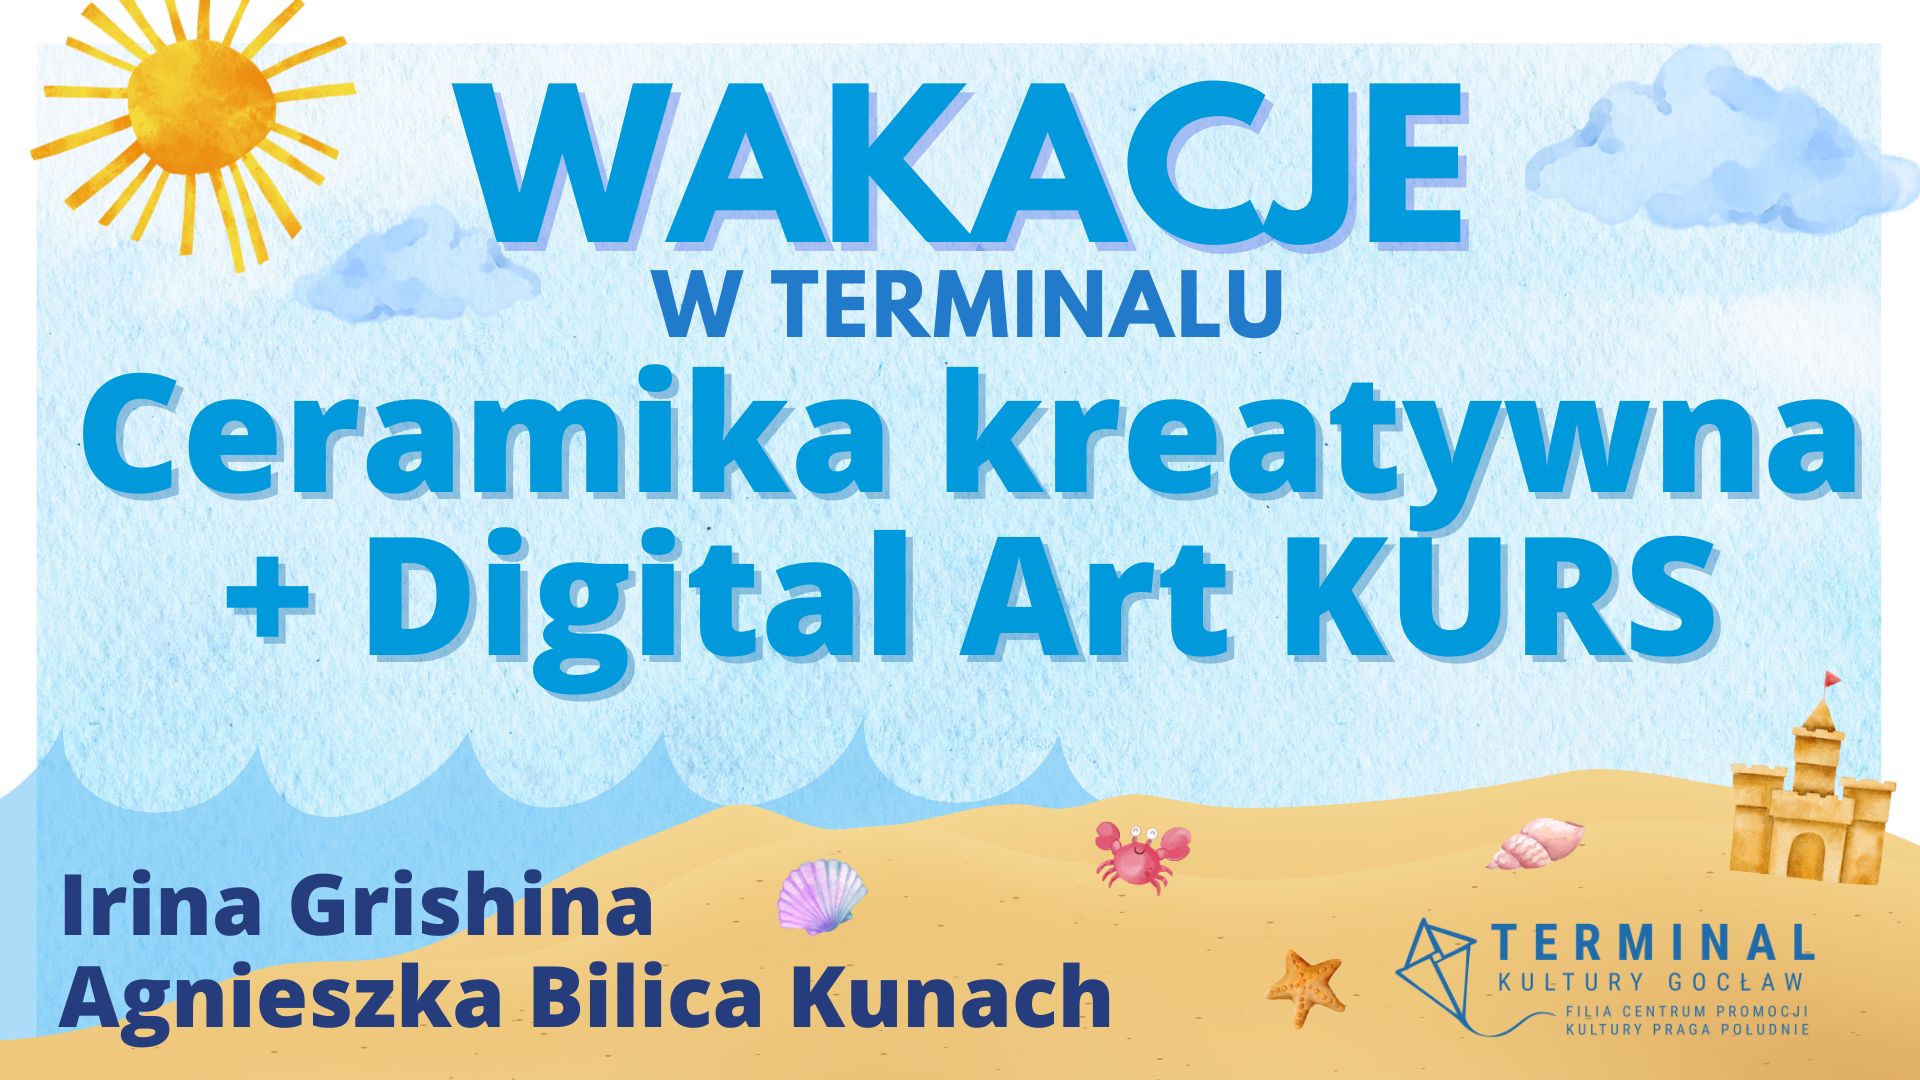 WAKACJE - CERAMIKA KREATYWNA + DIGITAL ART - Irina Grishina i Agnieszka Bilica Kunach